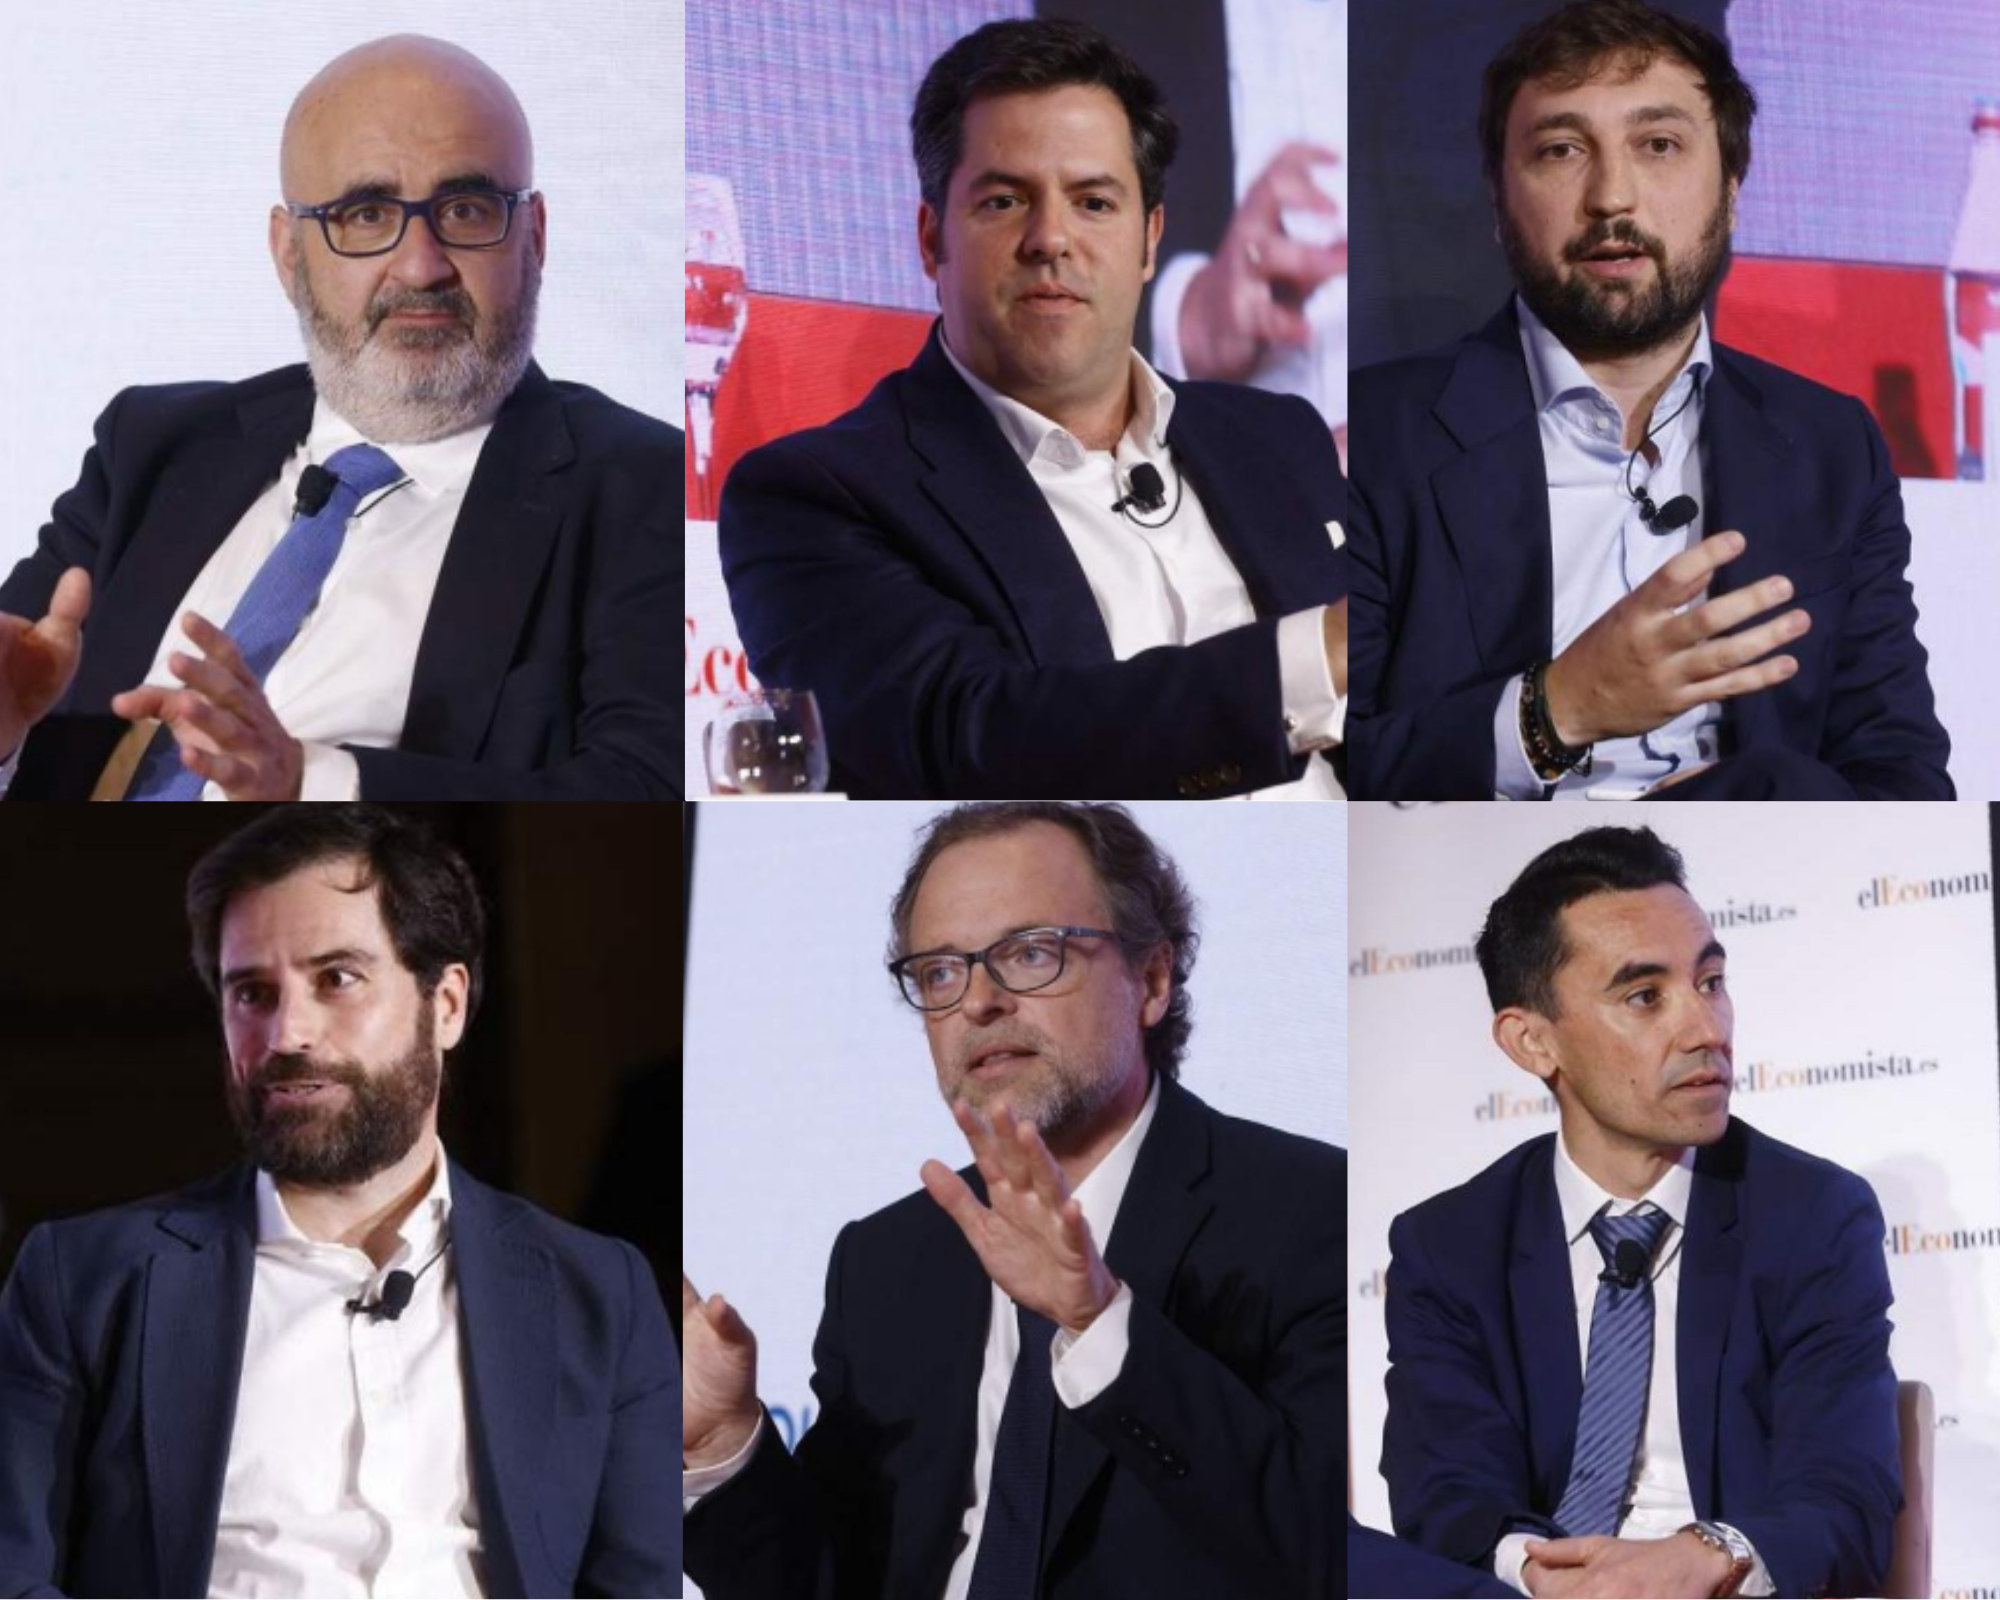 elEconomista 2023 all panelists